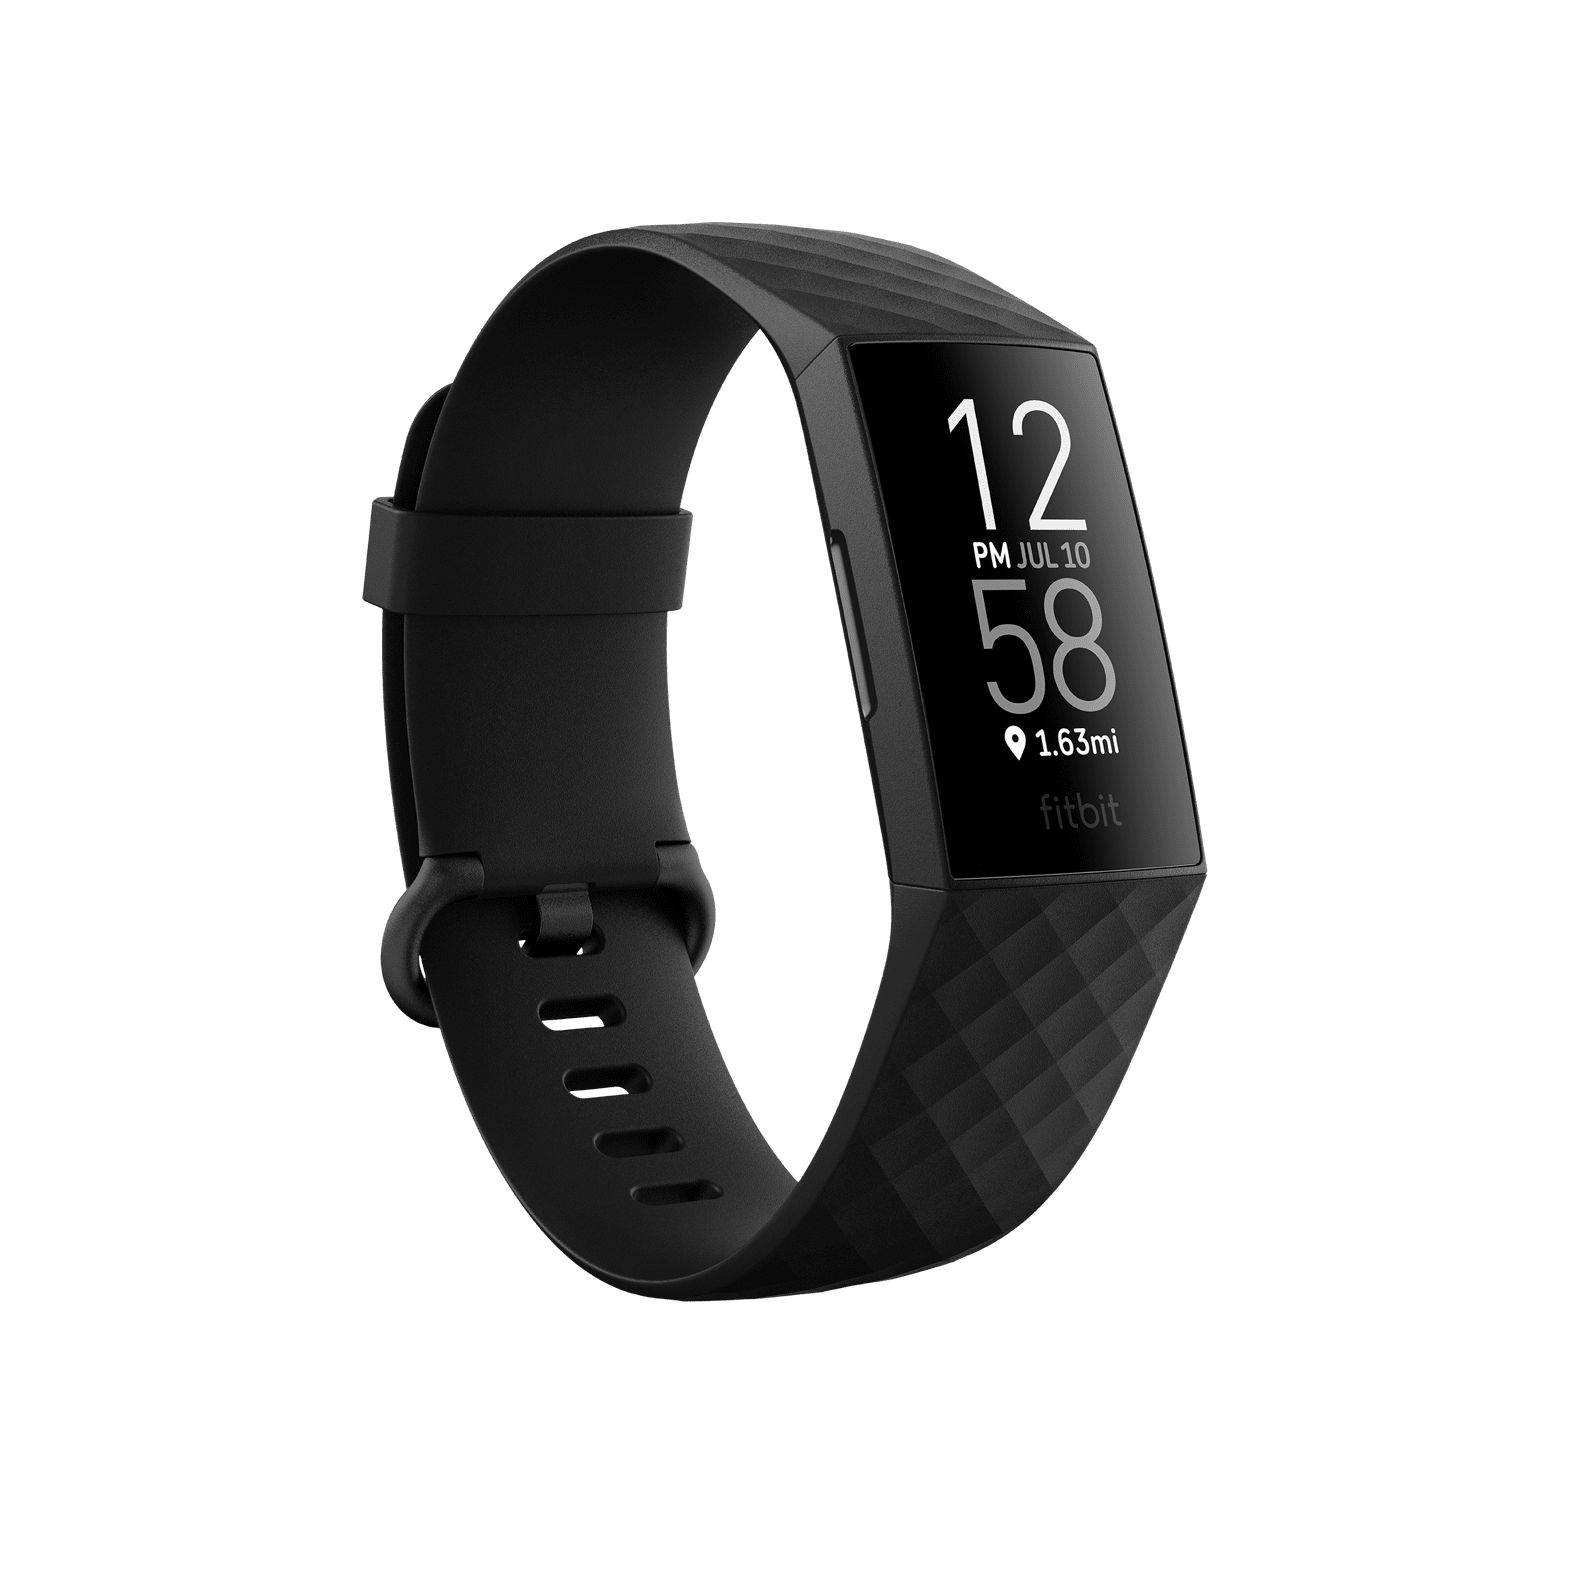 Fitbit Charge 4 (ฟรี! ฟิล์มกันรอย 2 ชิ้น)【ประกันศูนย์ไทย 1 ปี】สายรัดข้อมือวัดชีพจร GPS ออกกำลังกาย